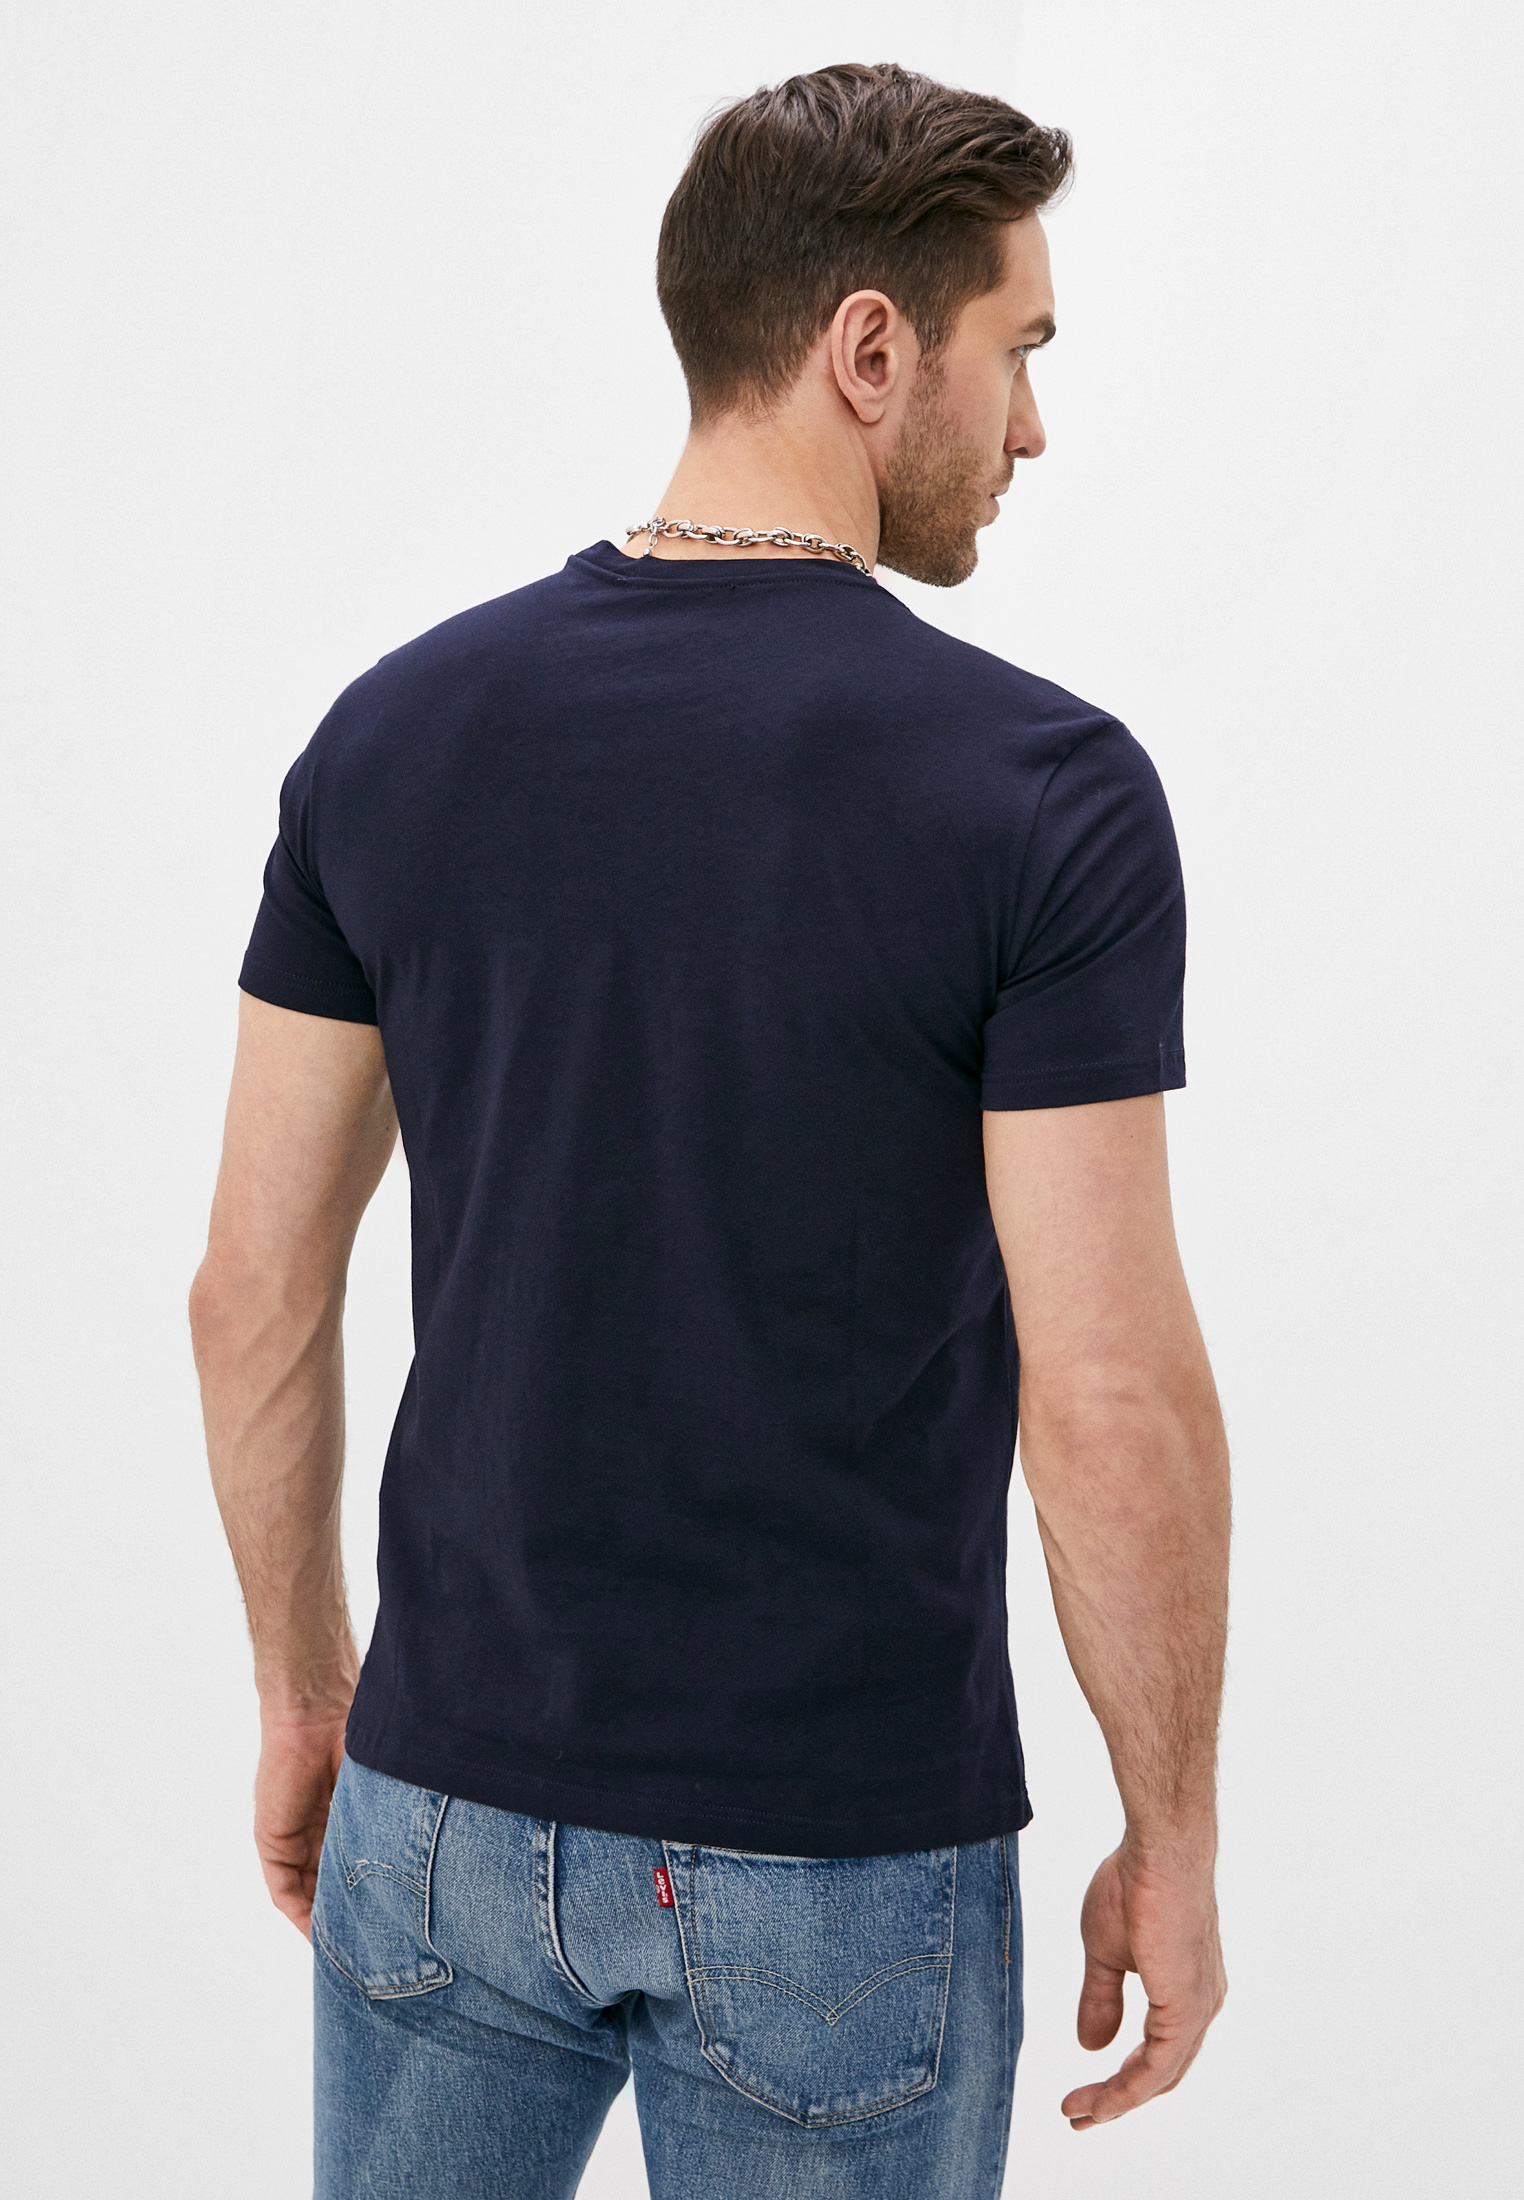 Мужская футболка Roberto Cavalli (Роберто Кавалли) GST655A0270: изображение 9